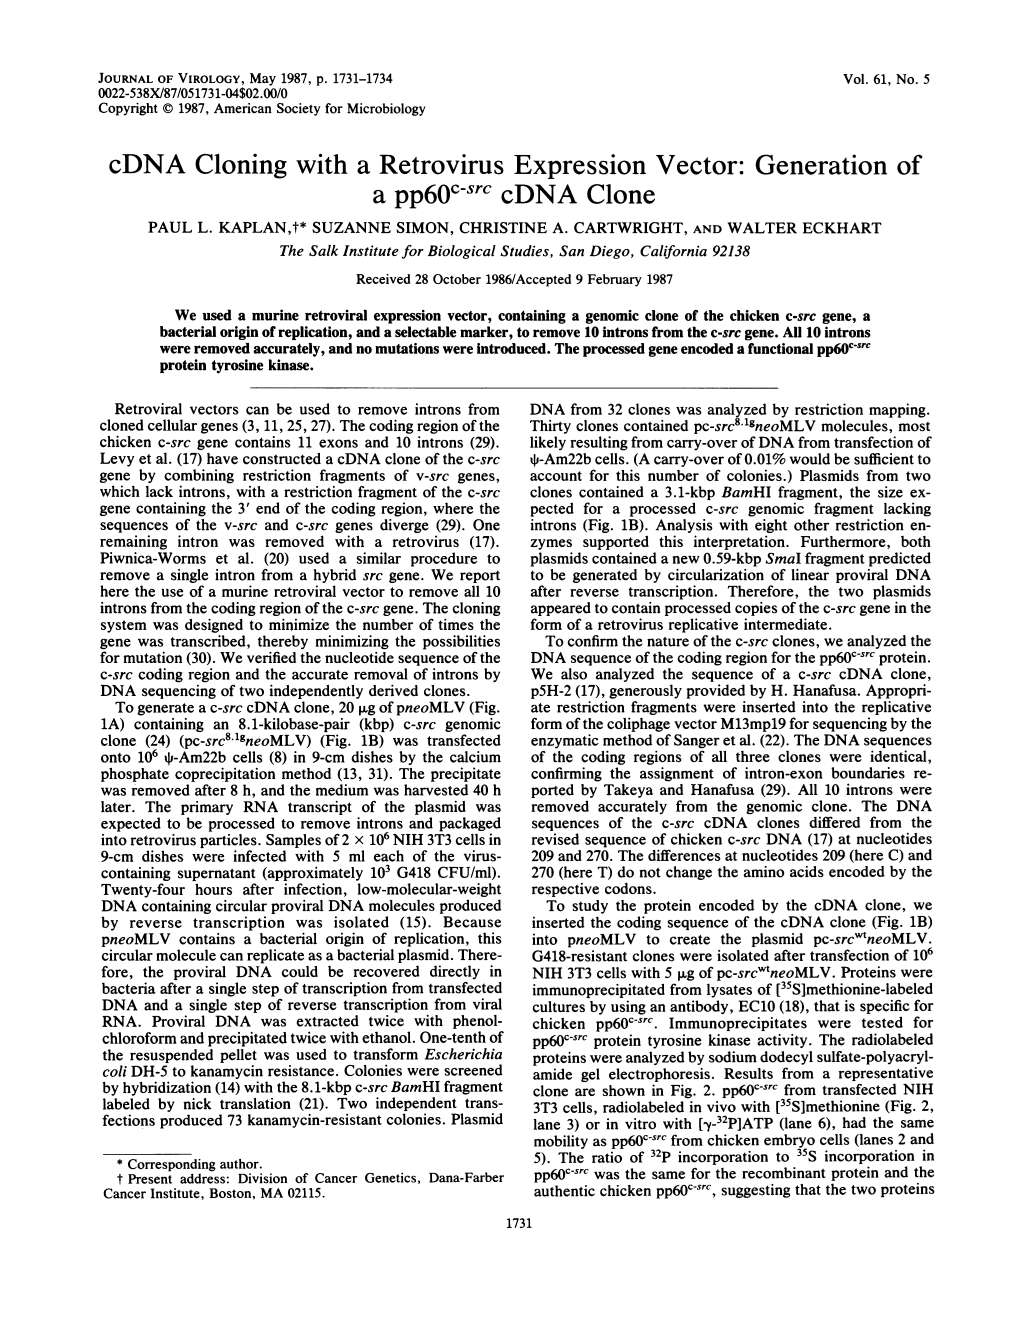 Cdna Cloning with a Retrovirus Expression Vector: Generation of a Pp6oc-Src Cdna Clone